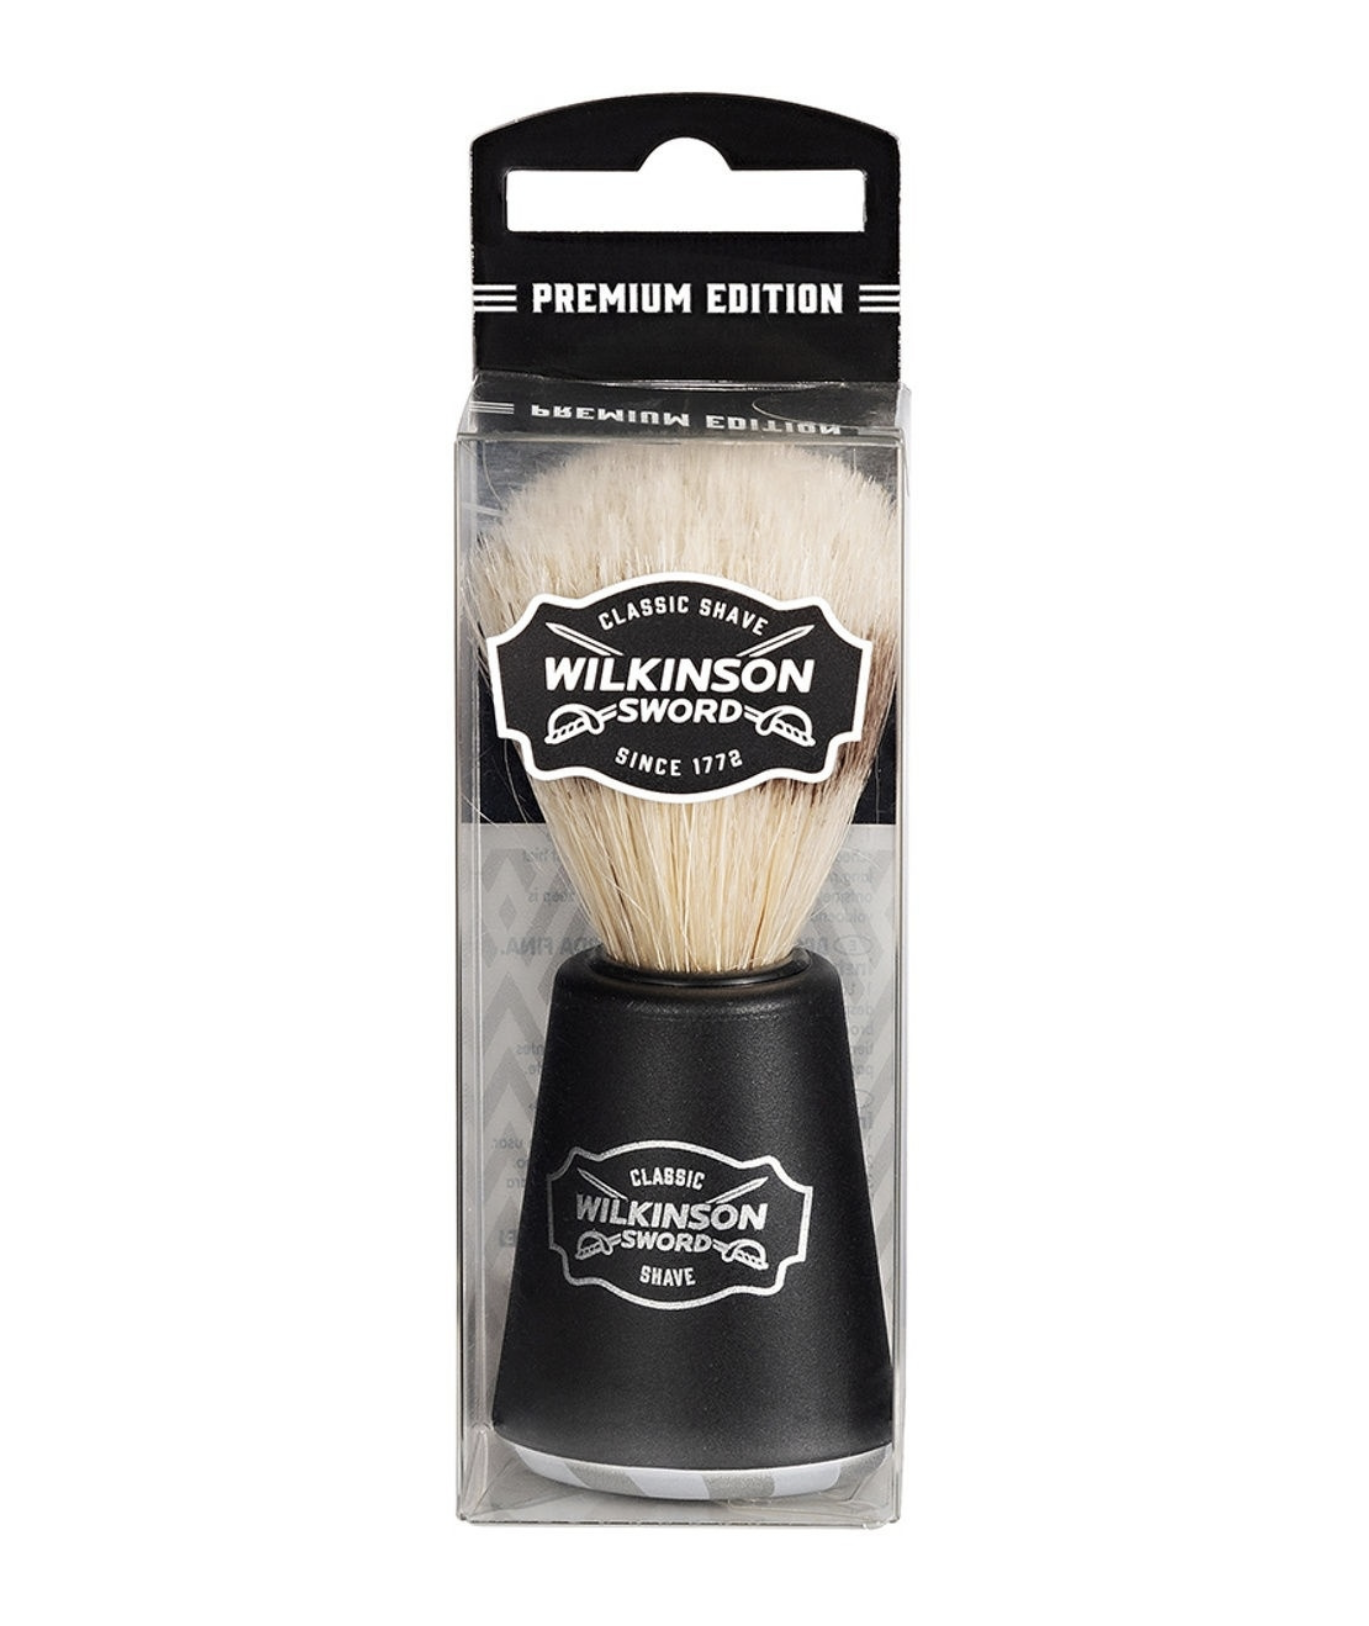   / Wilkinson Sword Shave -    Premium Edition